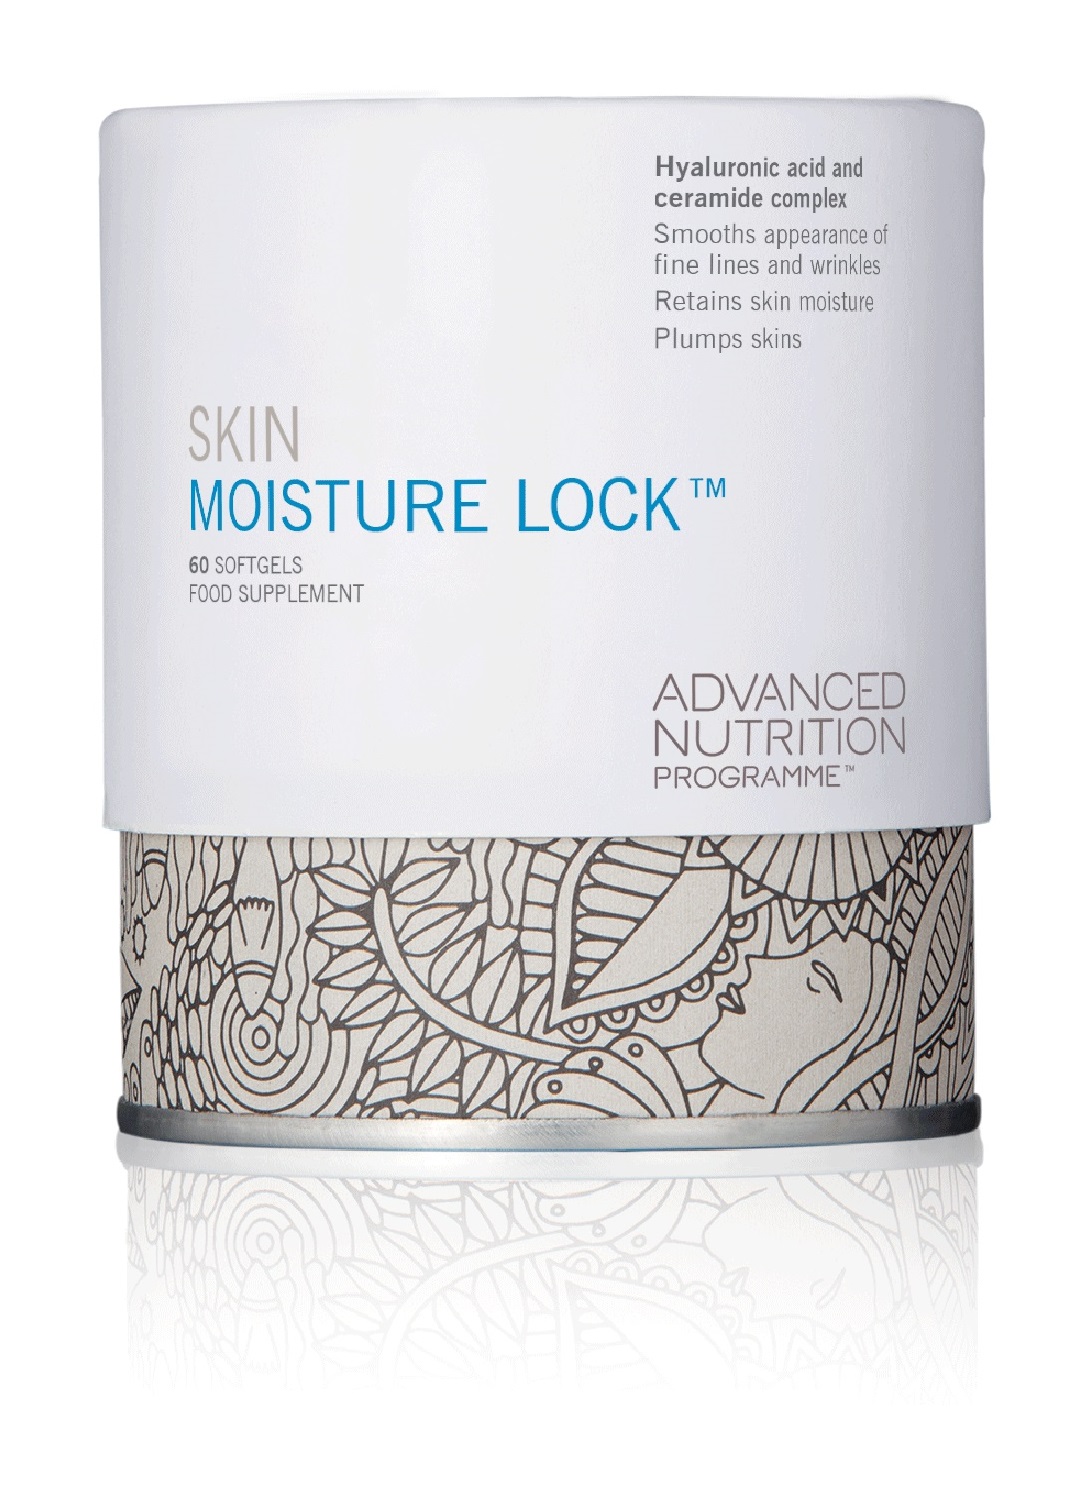 Advanced Nutrition Programme's Skin Moisture Lock